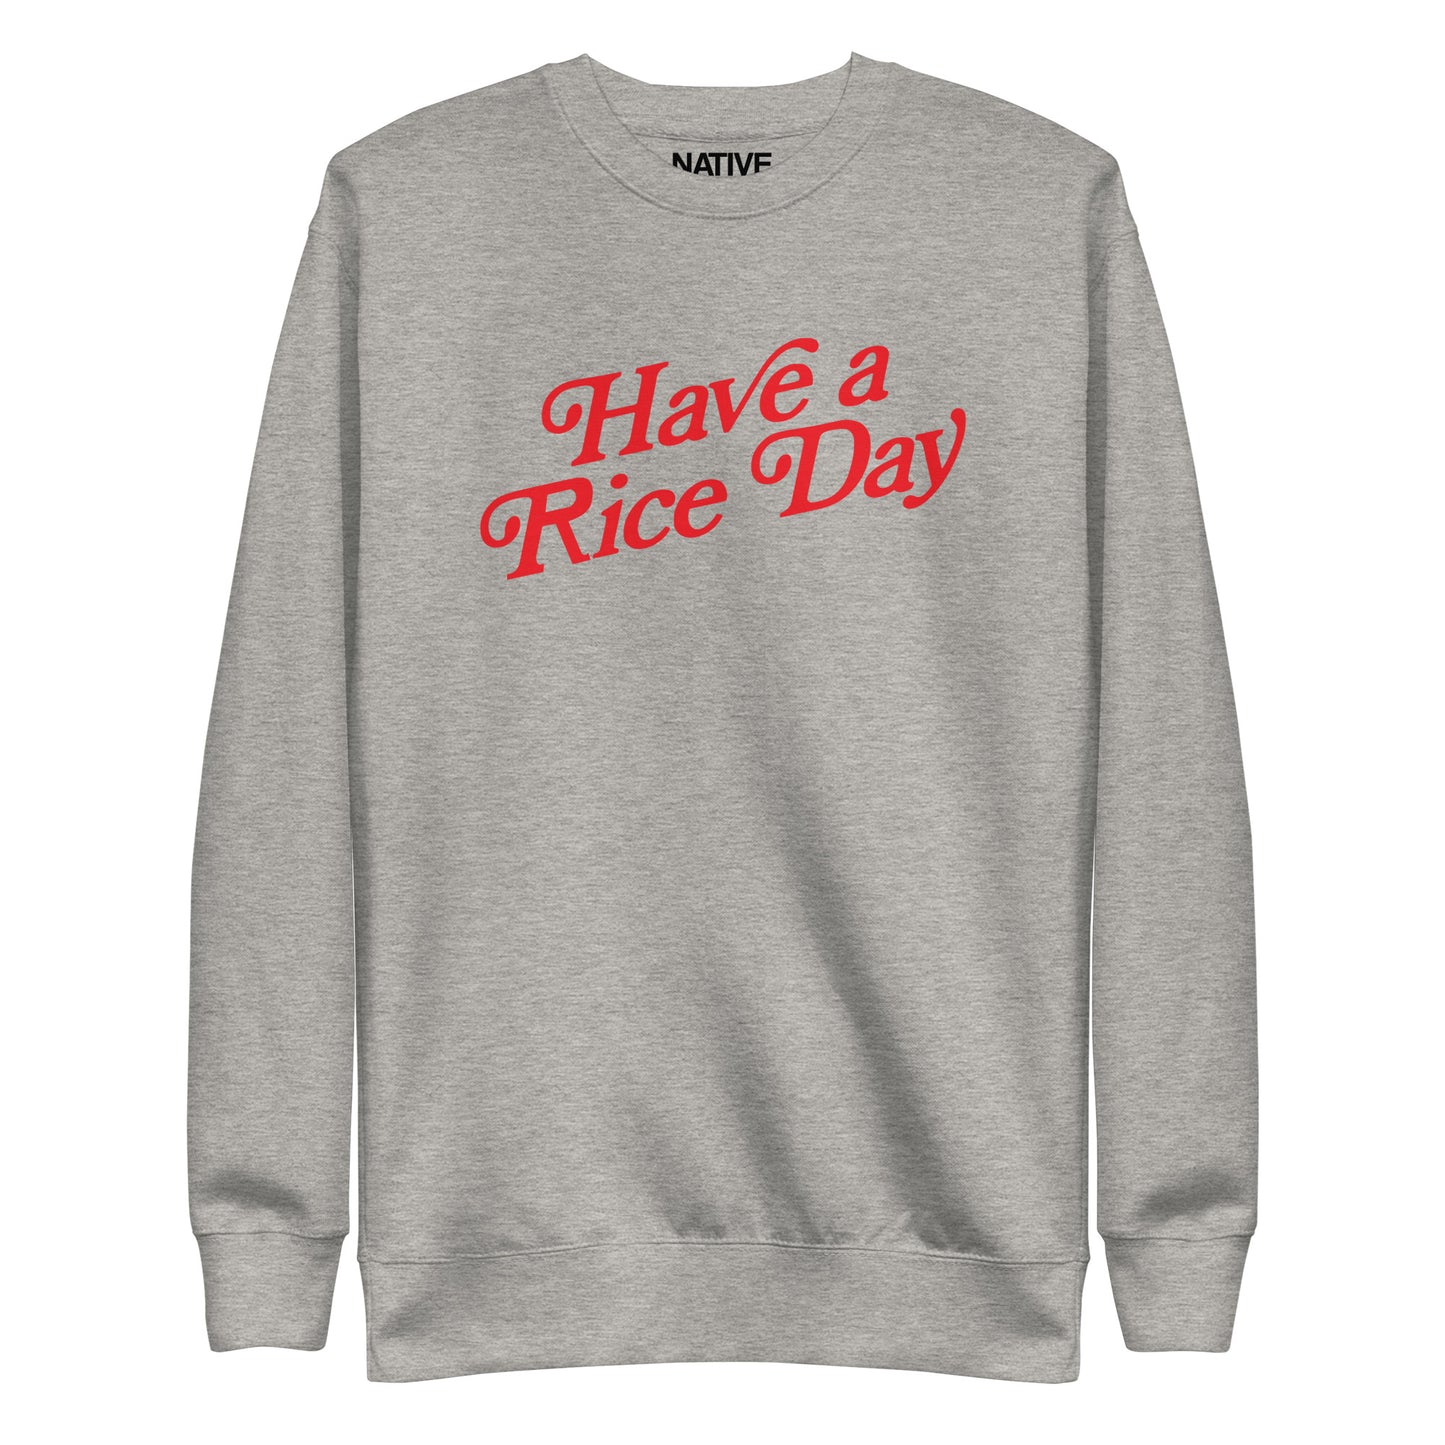 Have a Rice Day Unisex Premium Sweatshirt